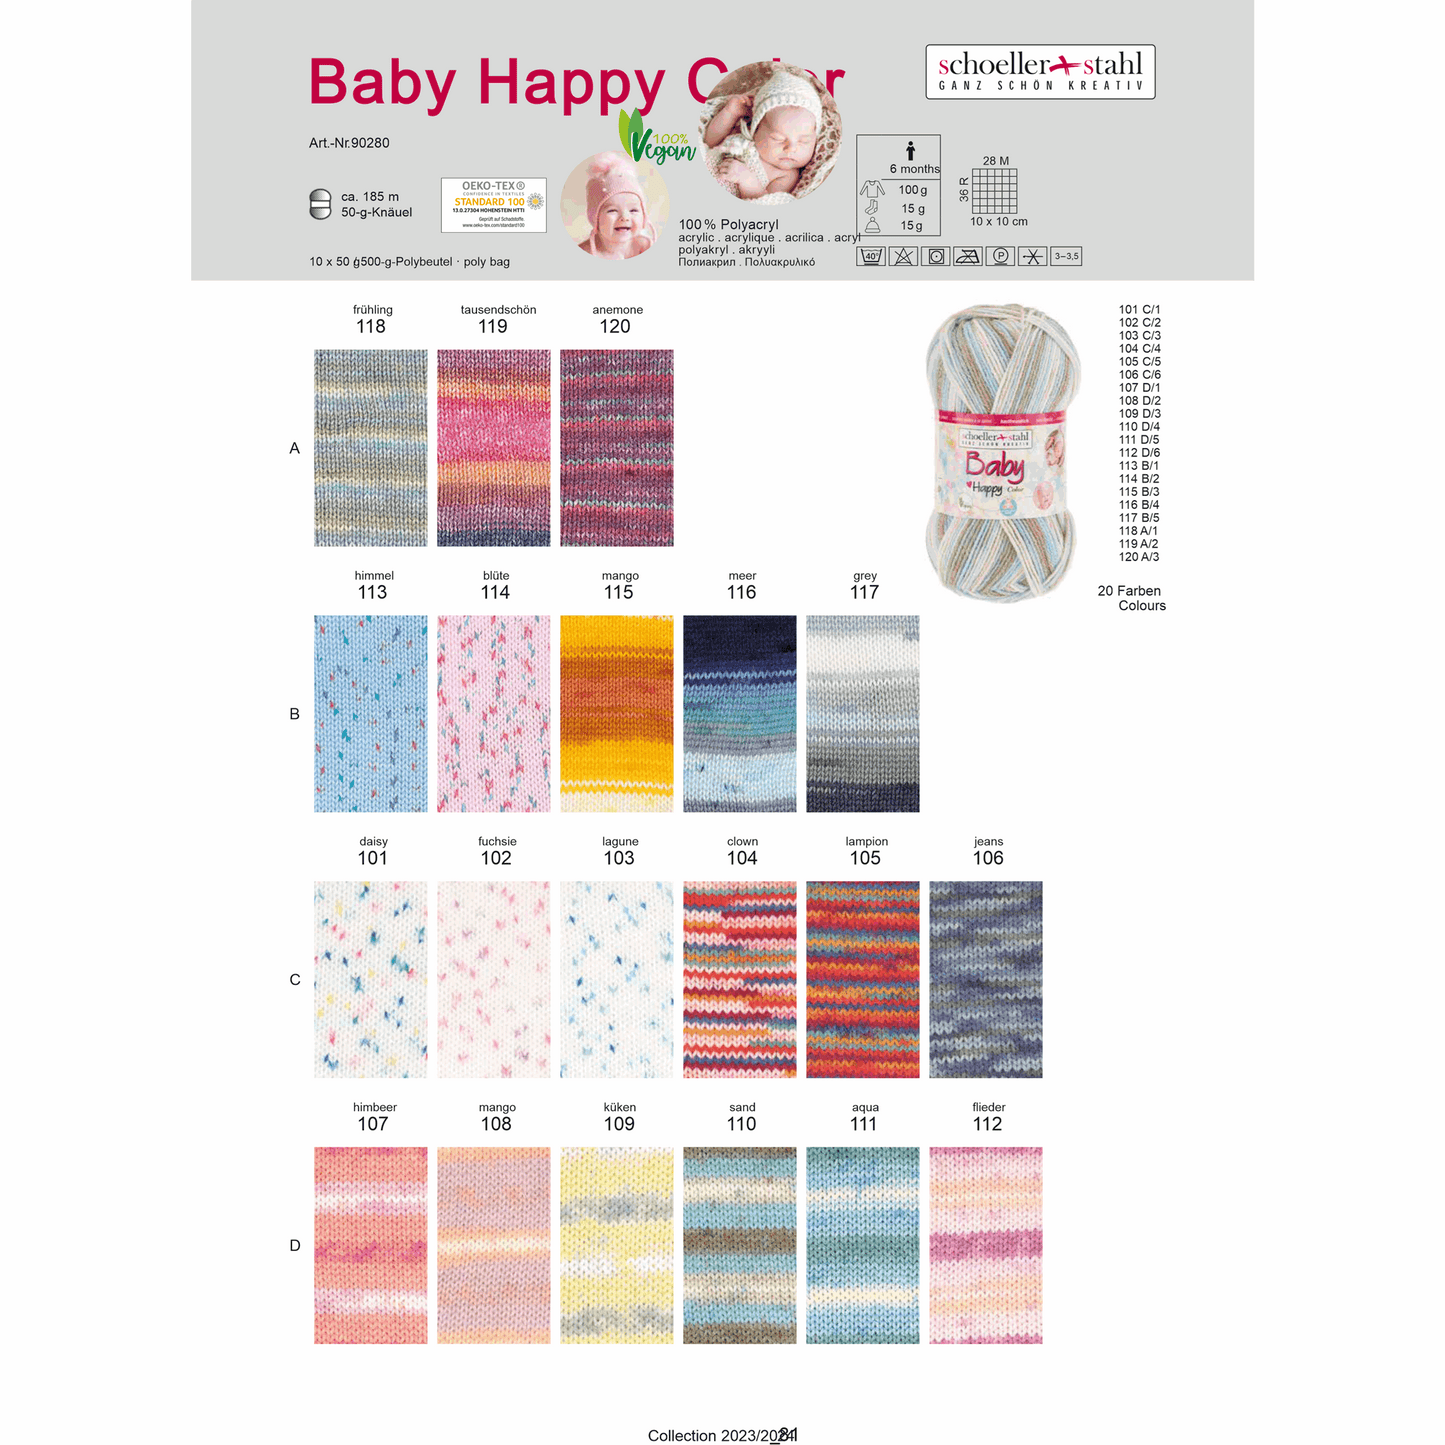 Baby happy color 50g, 90280, Farbe 116, meer